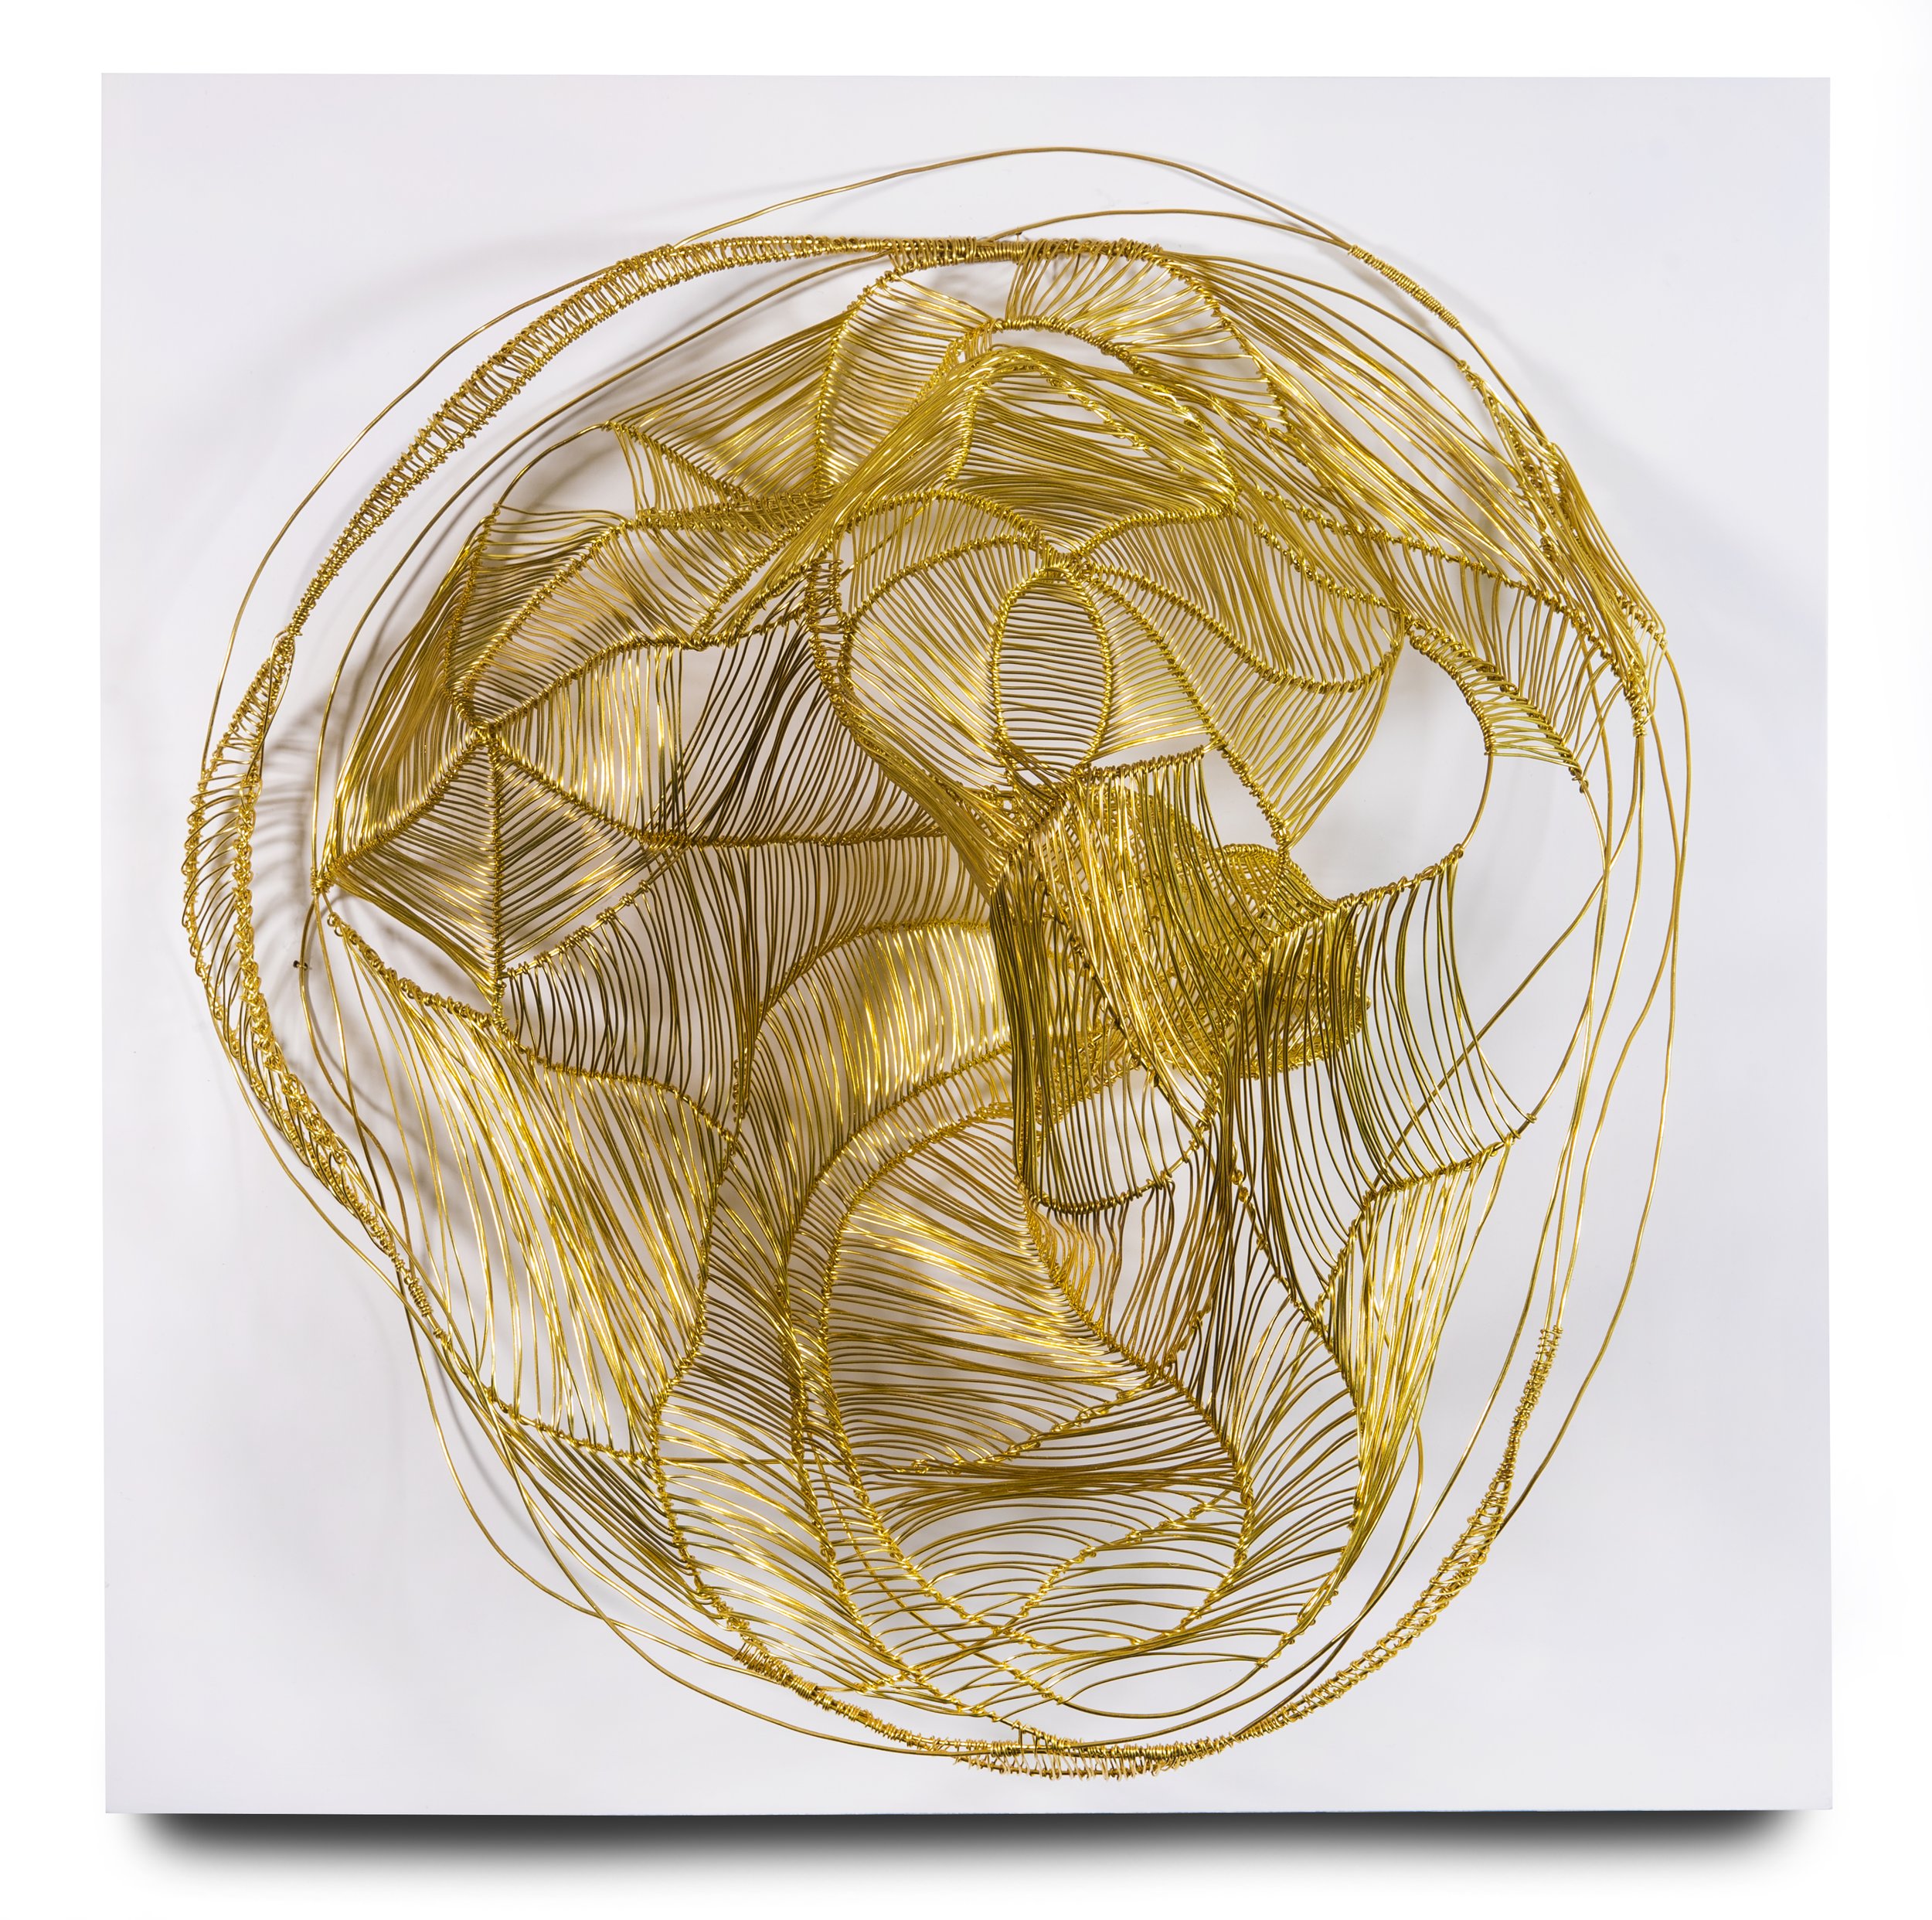   Walk Slowly - Nest in Gold 3 , brass wire, 18” x 18” x 7” 